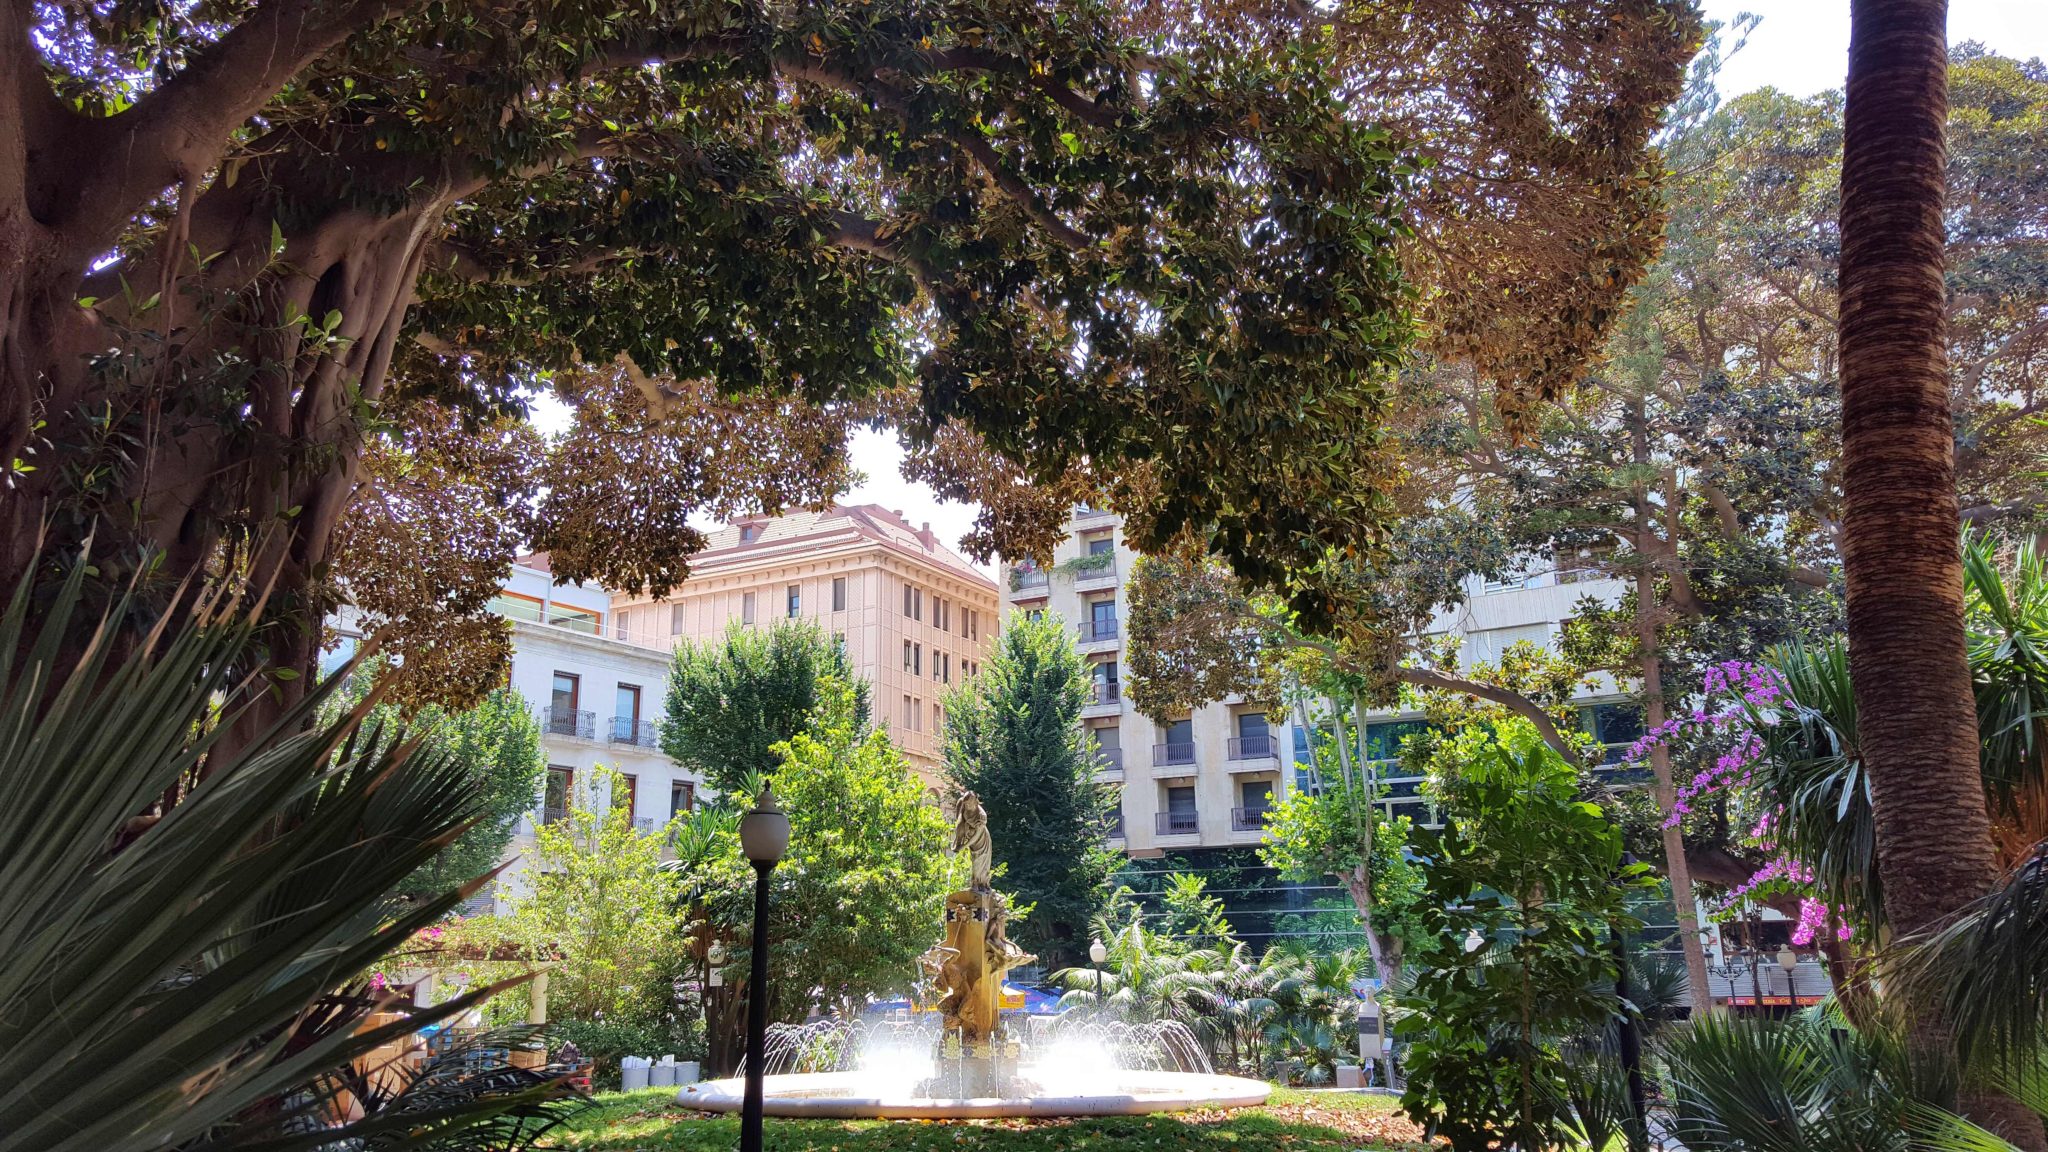 Plaza Gabriel Miró - Alicante - Espanha © Viaje Comigo